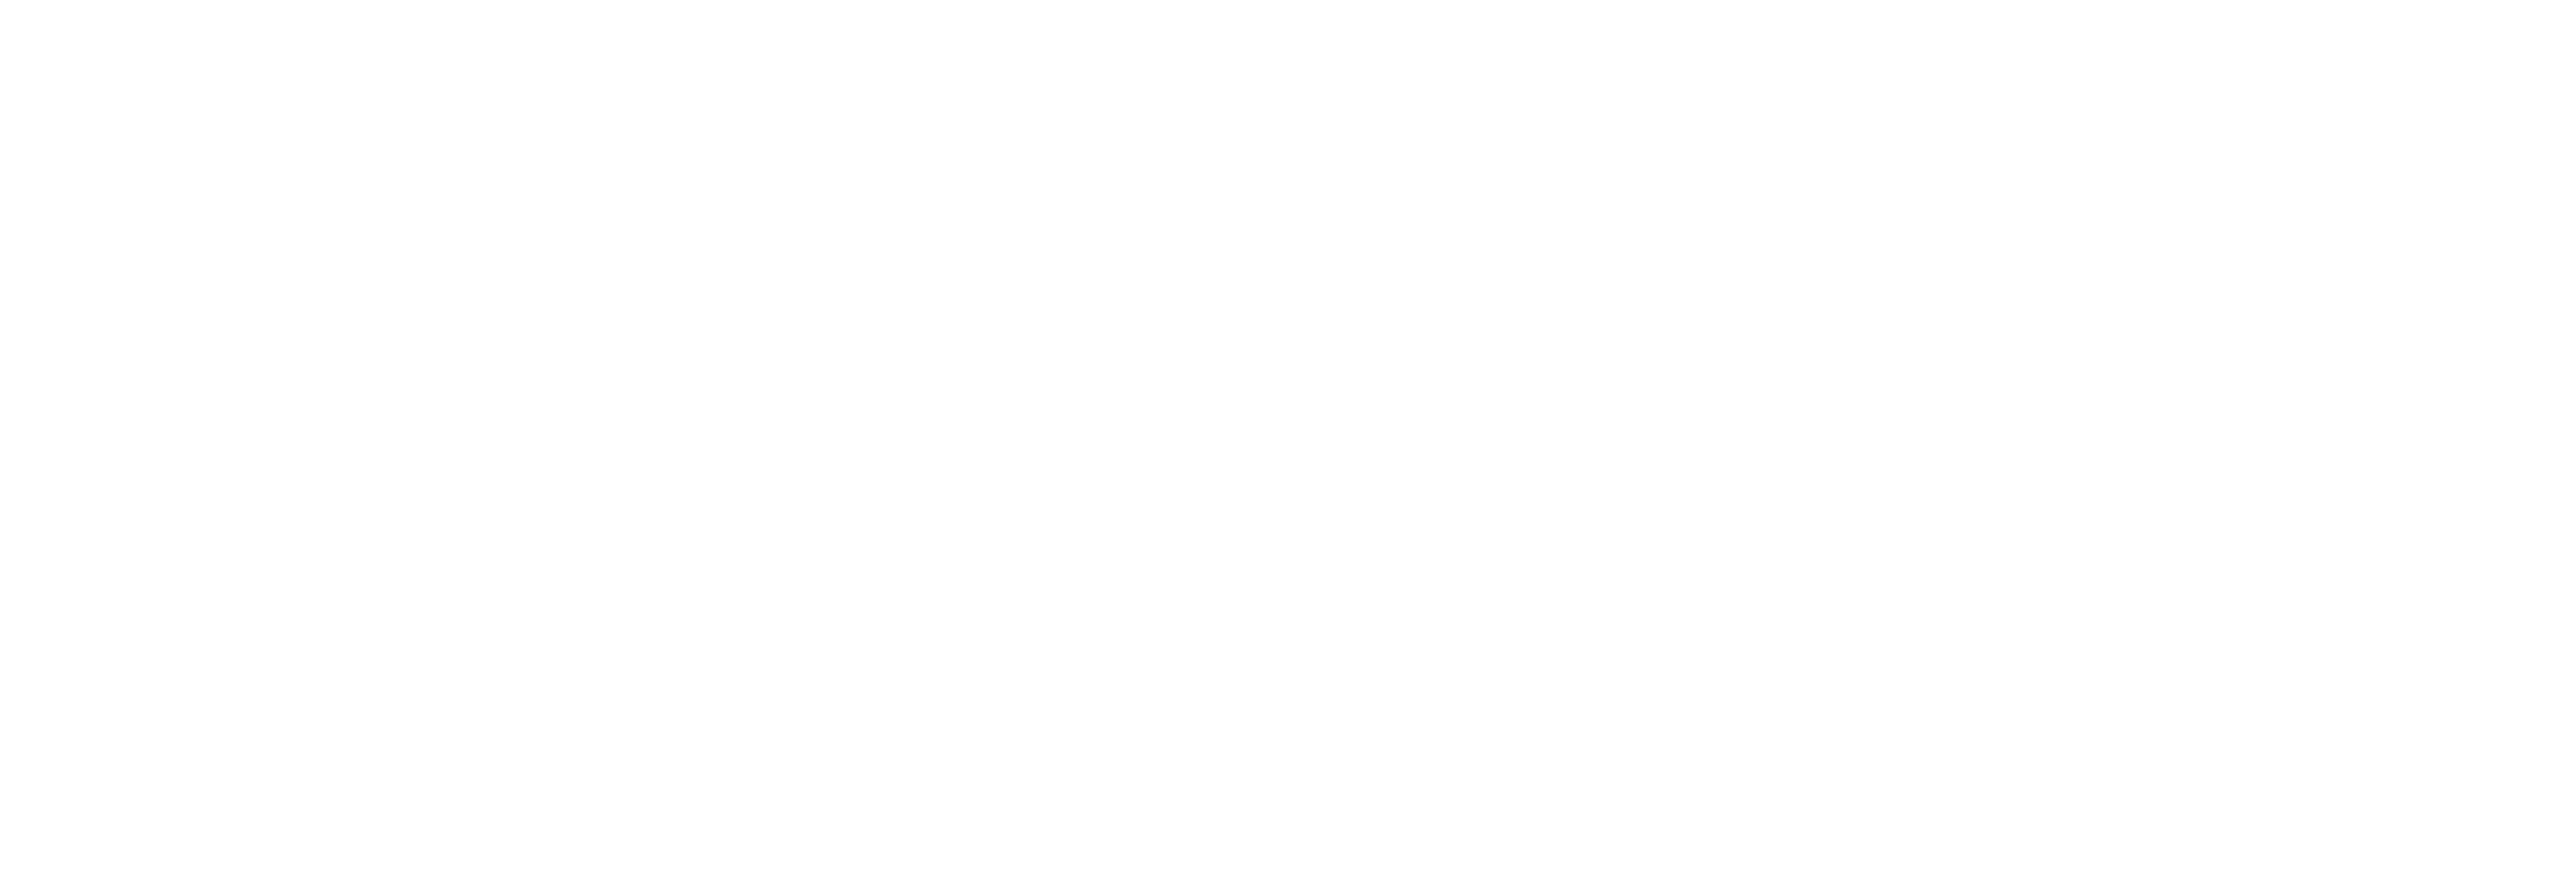 AniCura Apeldoorn logo